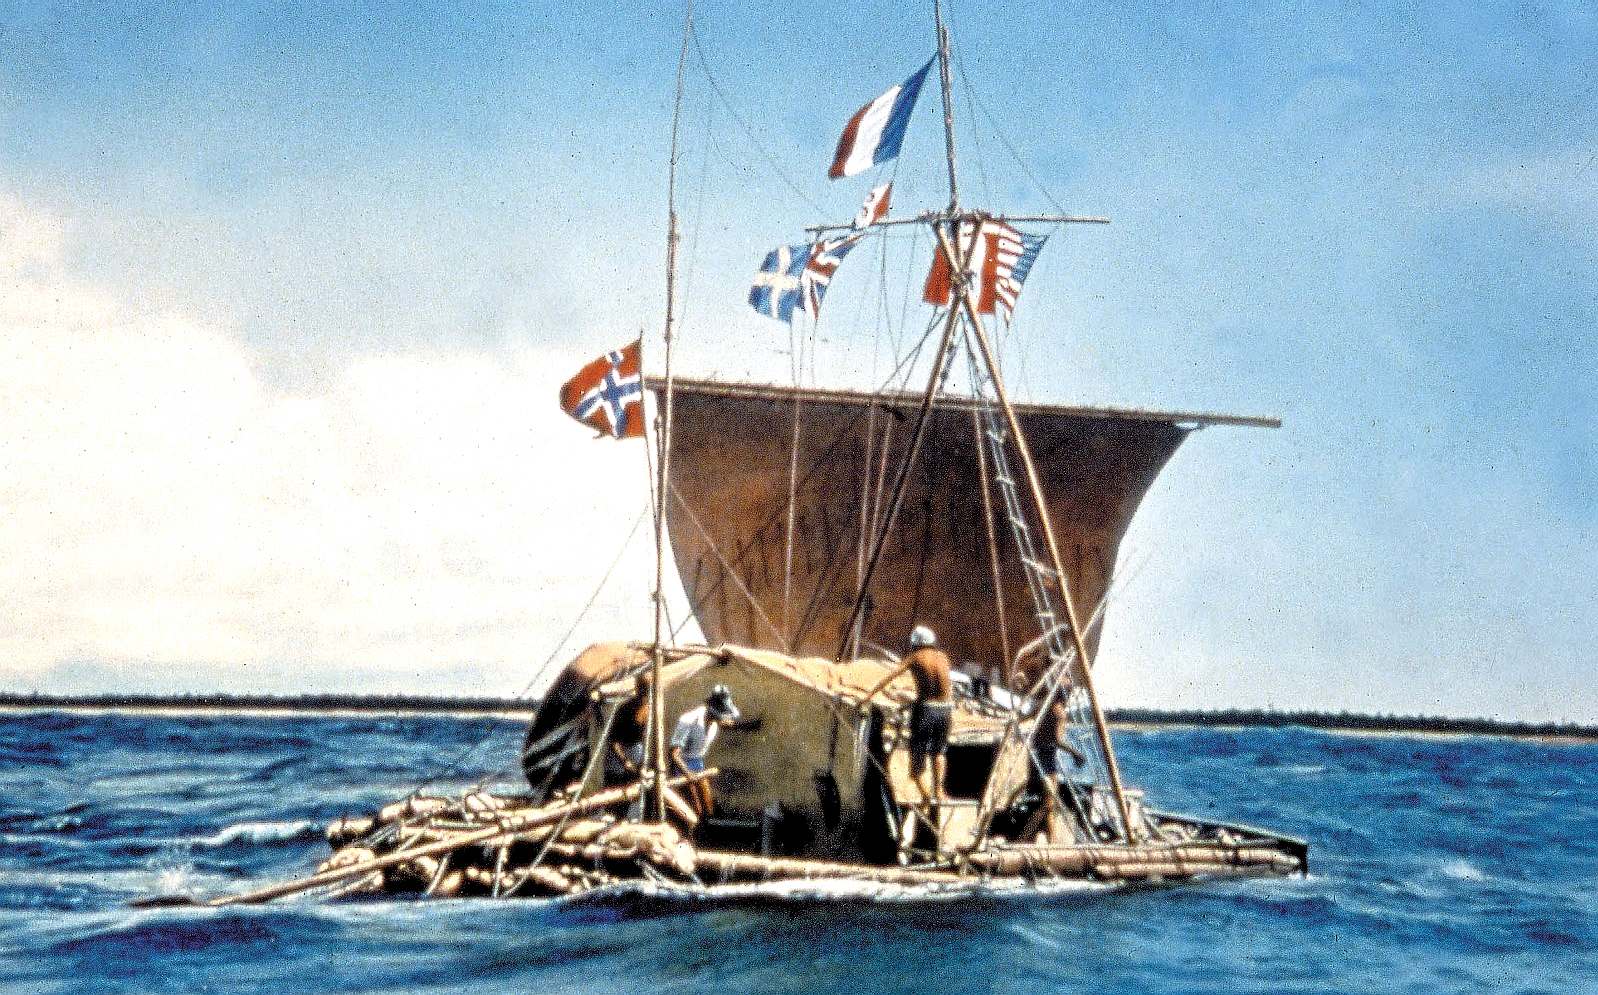 Kon Tiki expedition balsa wood raft Thor Heyerdahl 1947